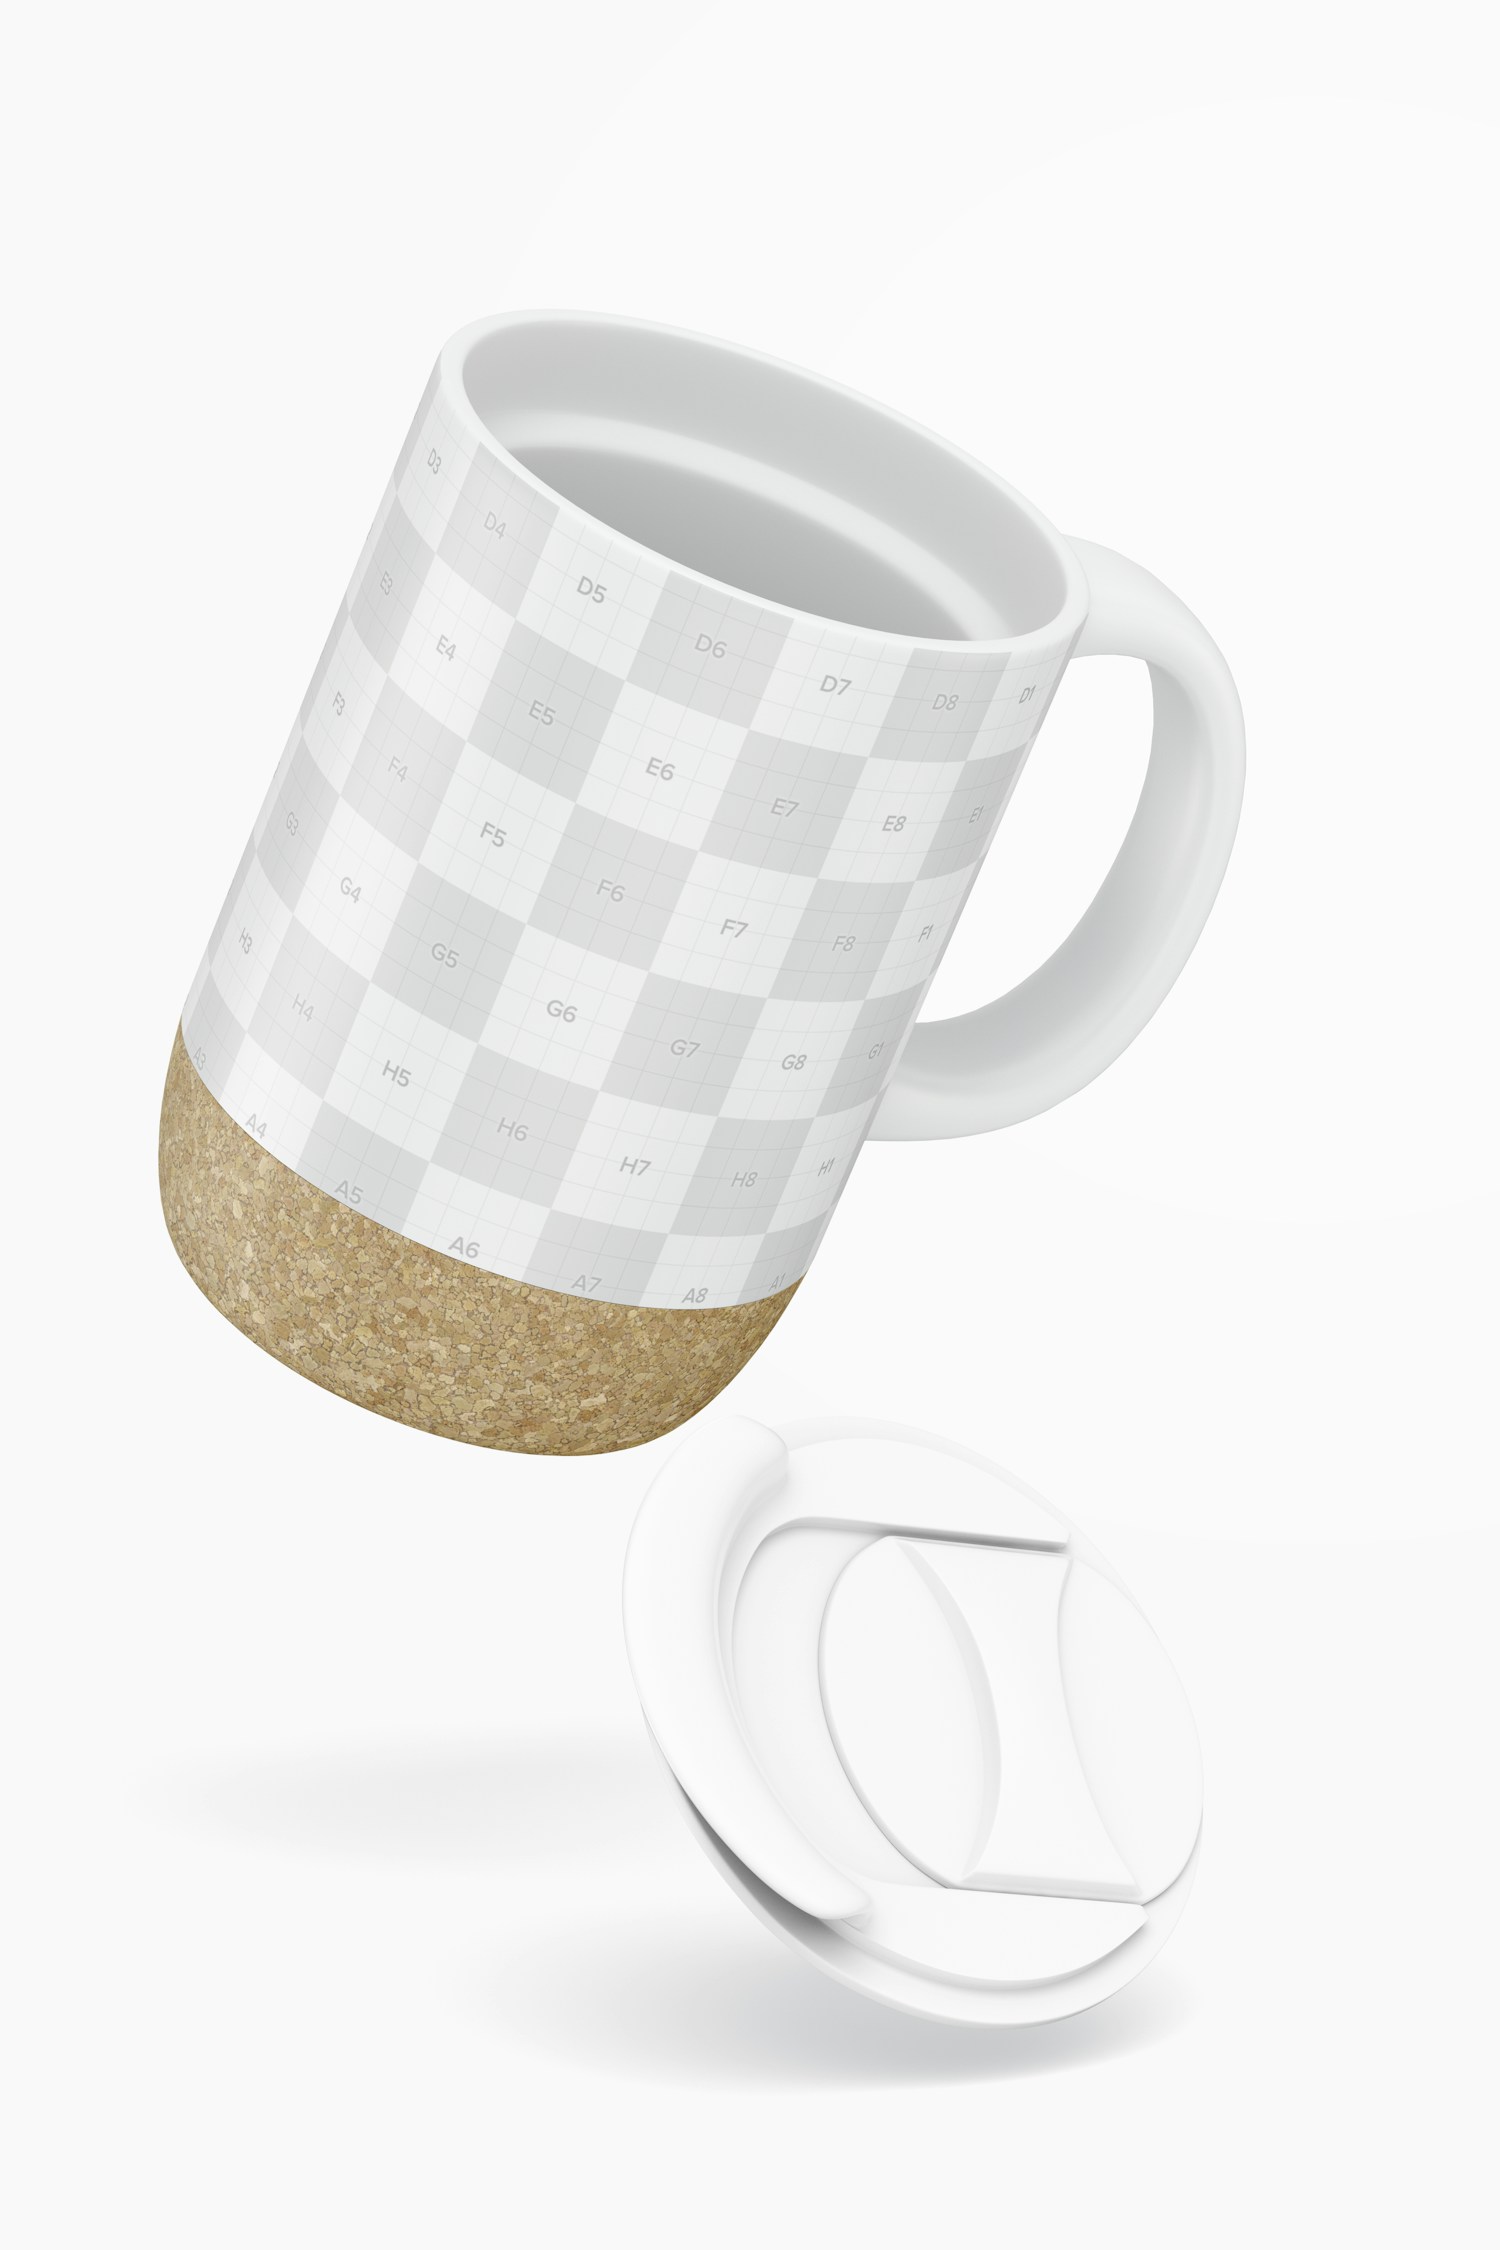 15 oz Ceramic Mug with Lid Mockup, Floating